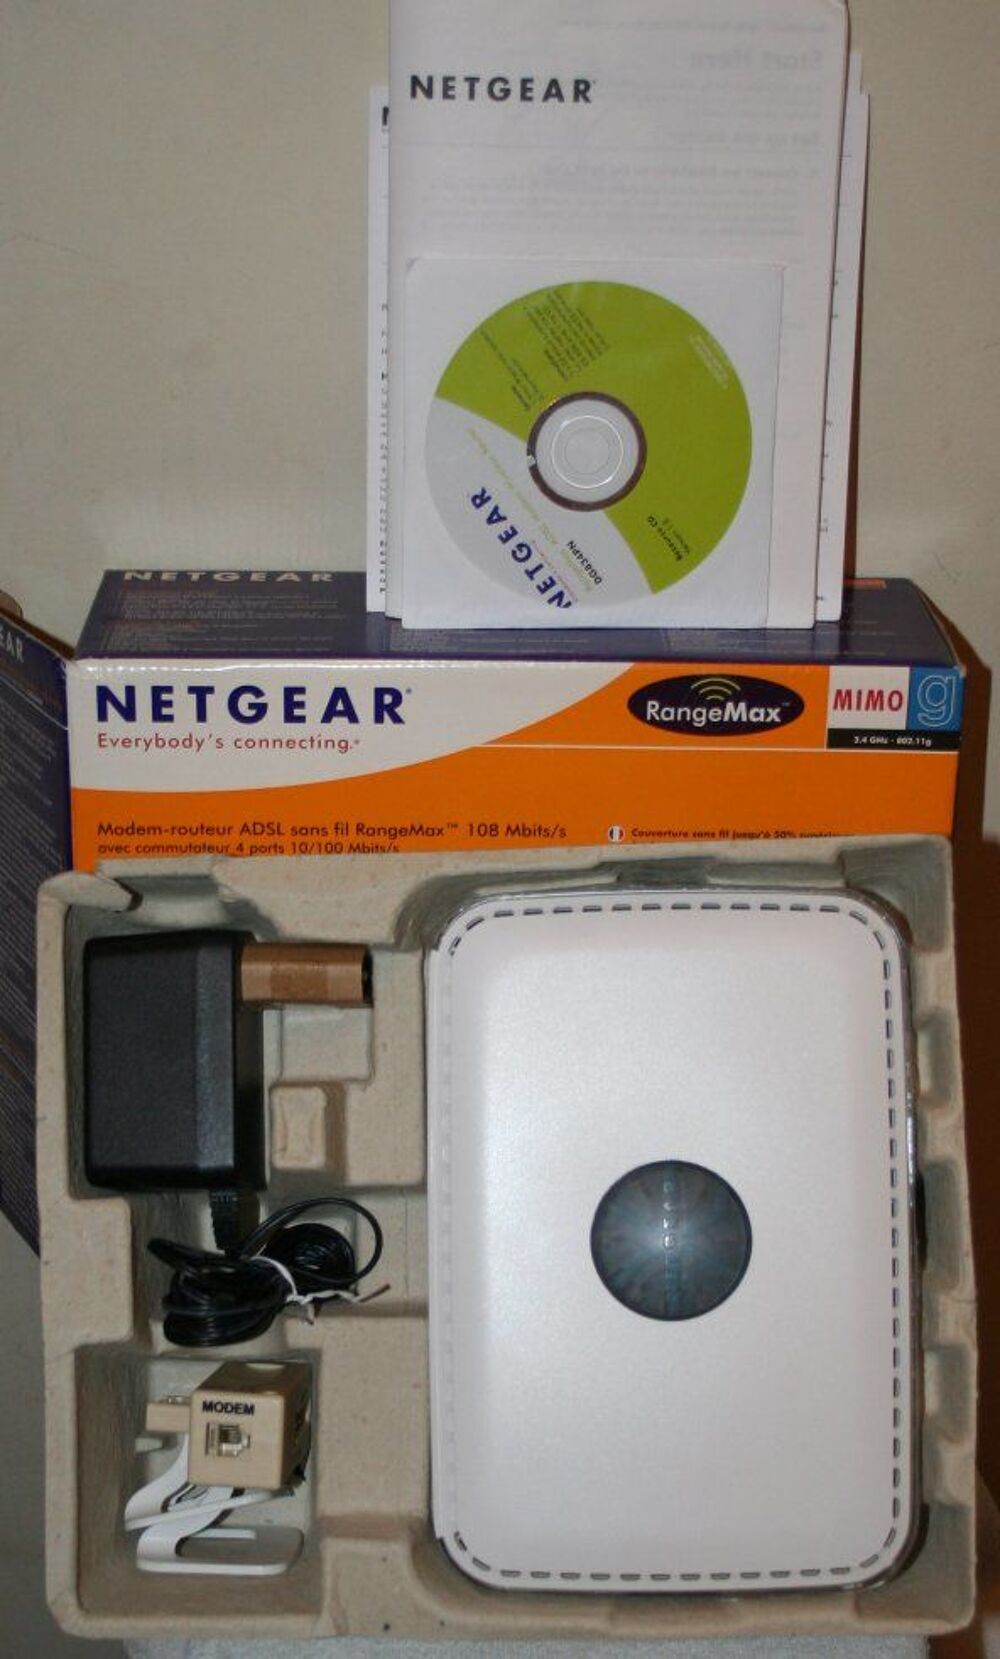 Modem-routeur ADSL, 3G, 4G Netgear DG834PN (MIMO, RangeMax) Matriel informatique